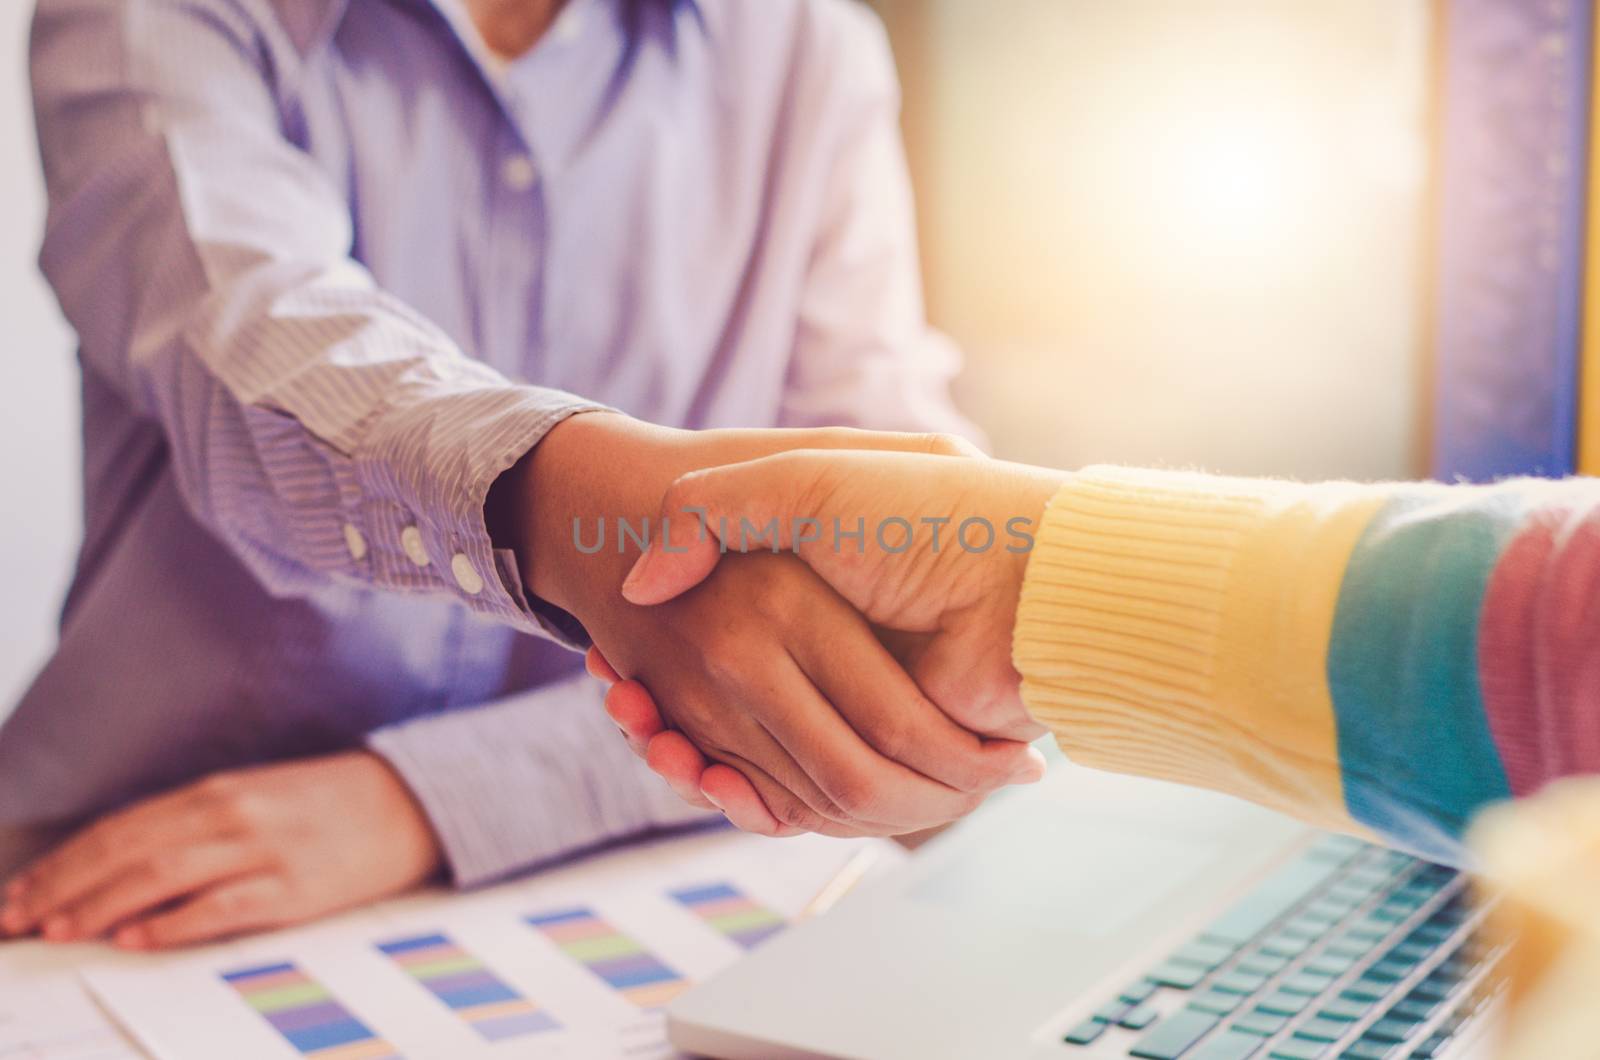 Handshake between joint venture businessmen after good managemen by photobyphotoboy